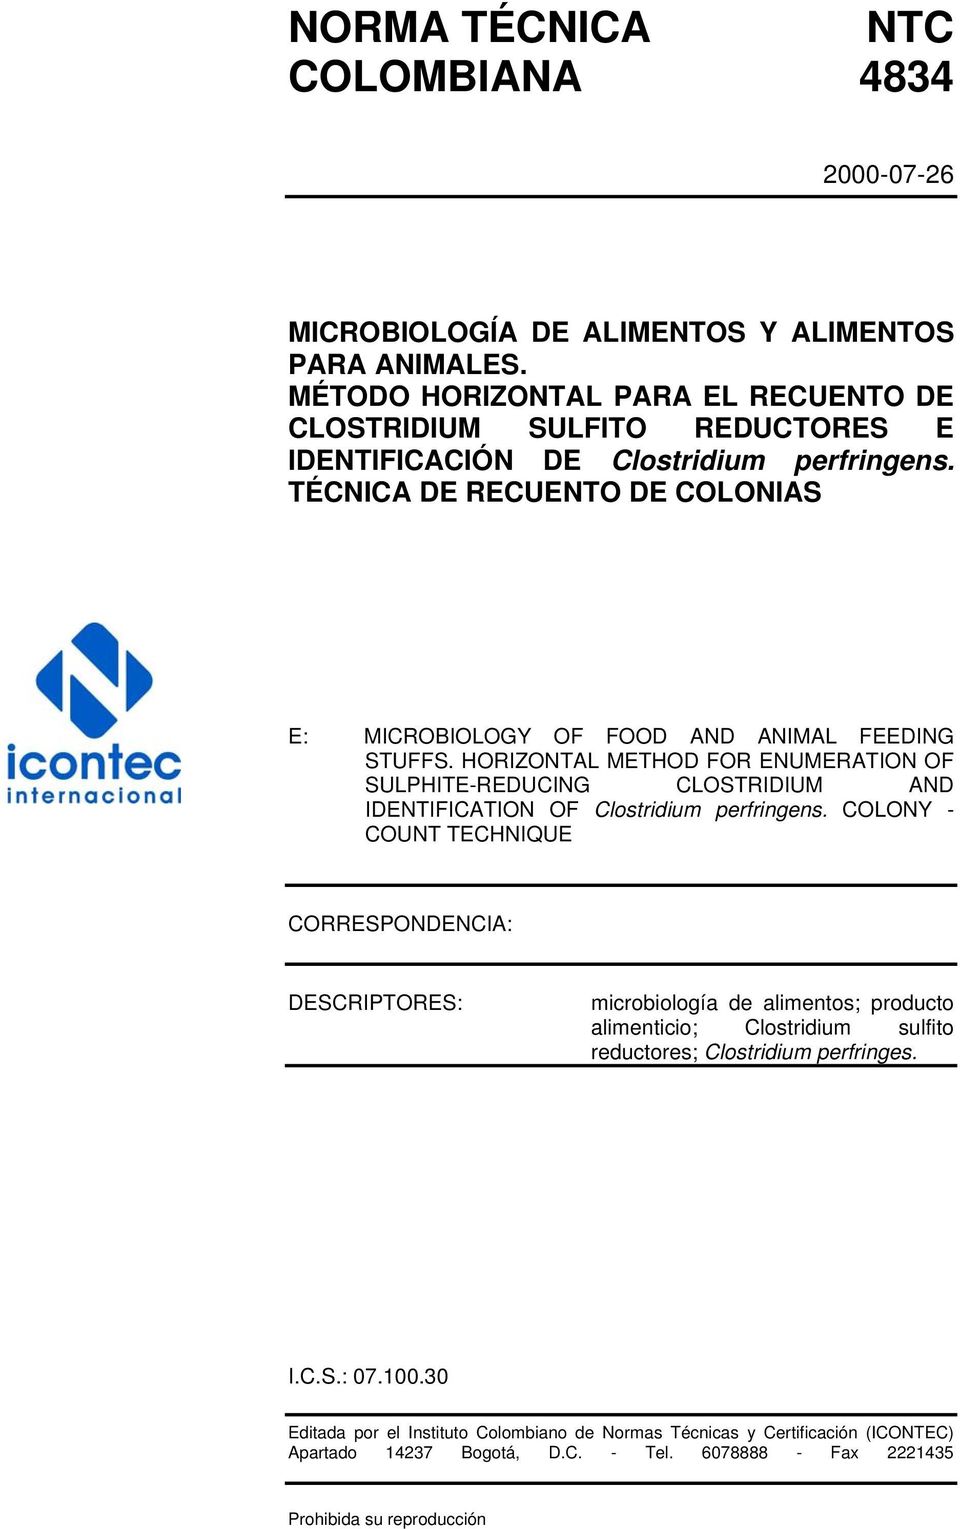 TÉCNICA DE RECUENTO DE COLONIAS E: MICROBIOLOGY OF FOOD AND ANIMAL FEEDING STUFFS.